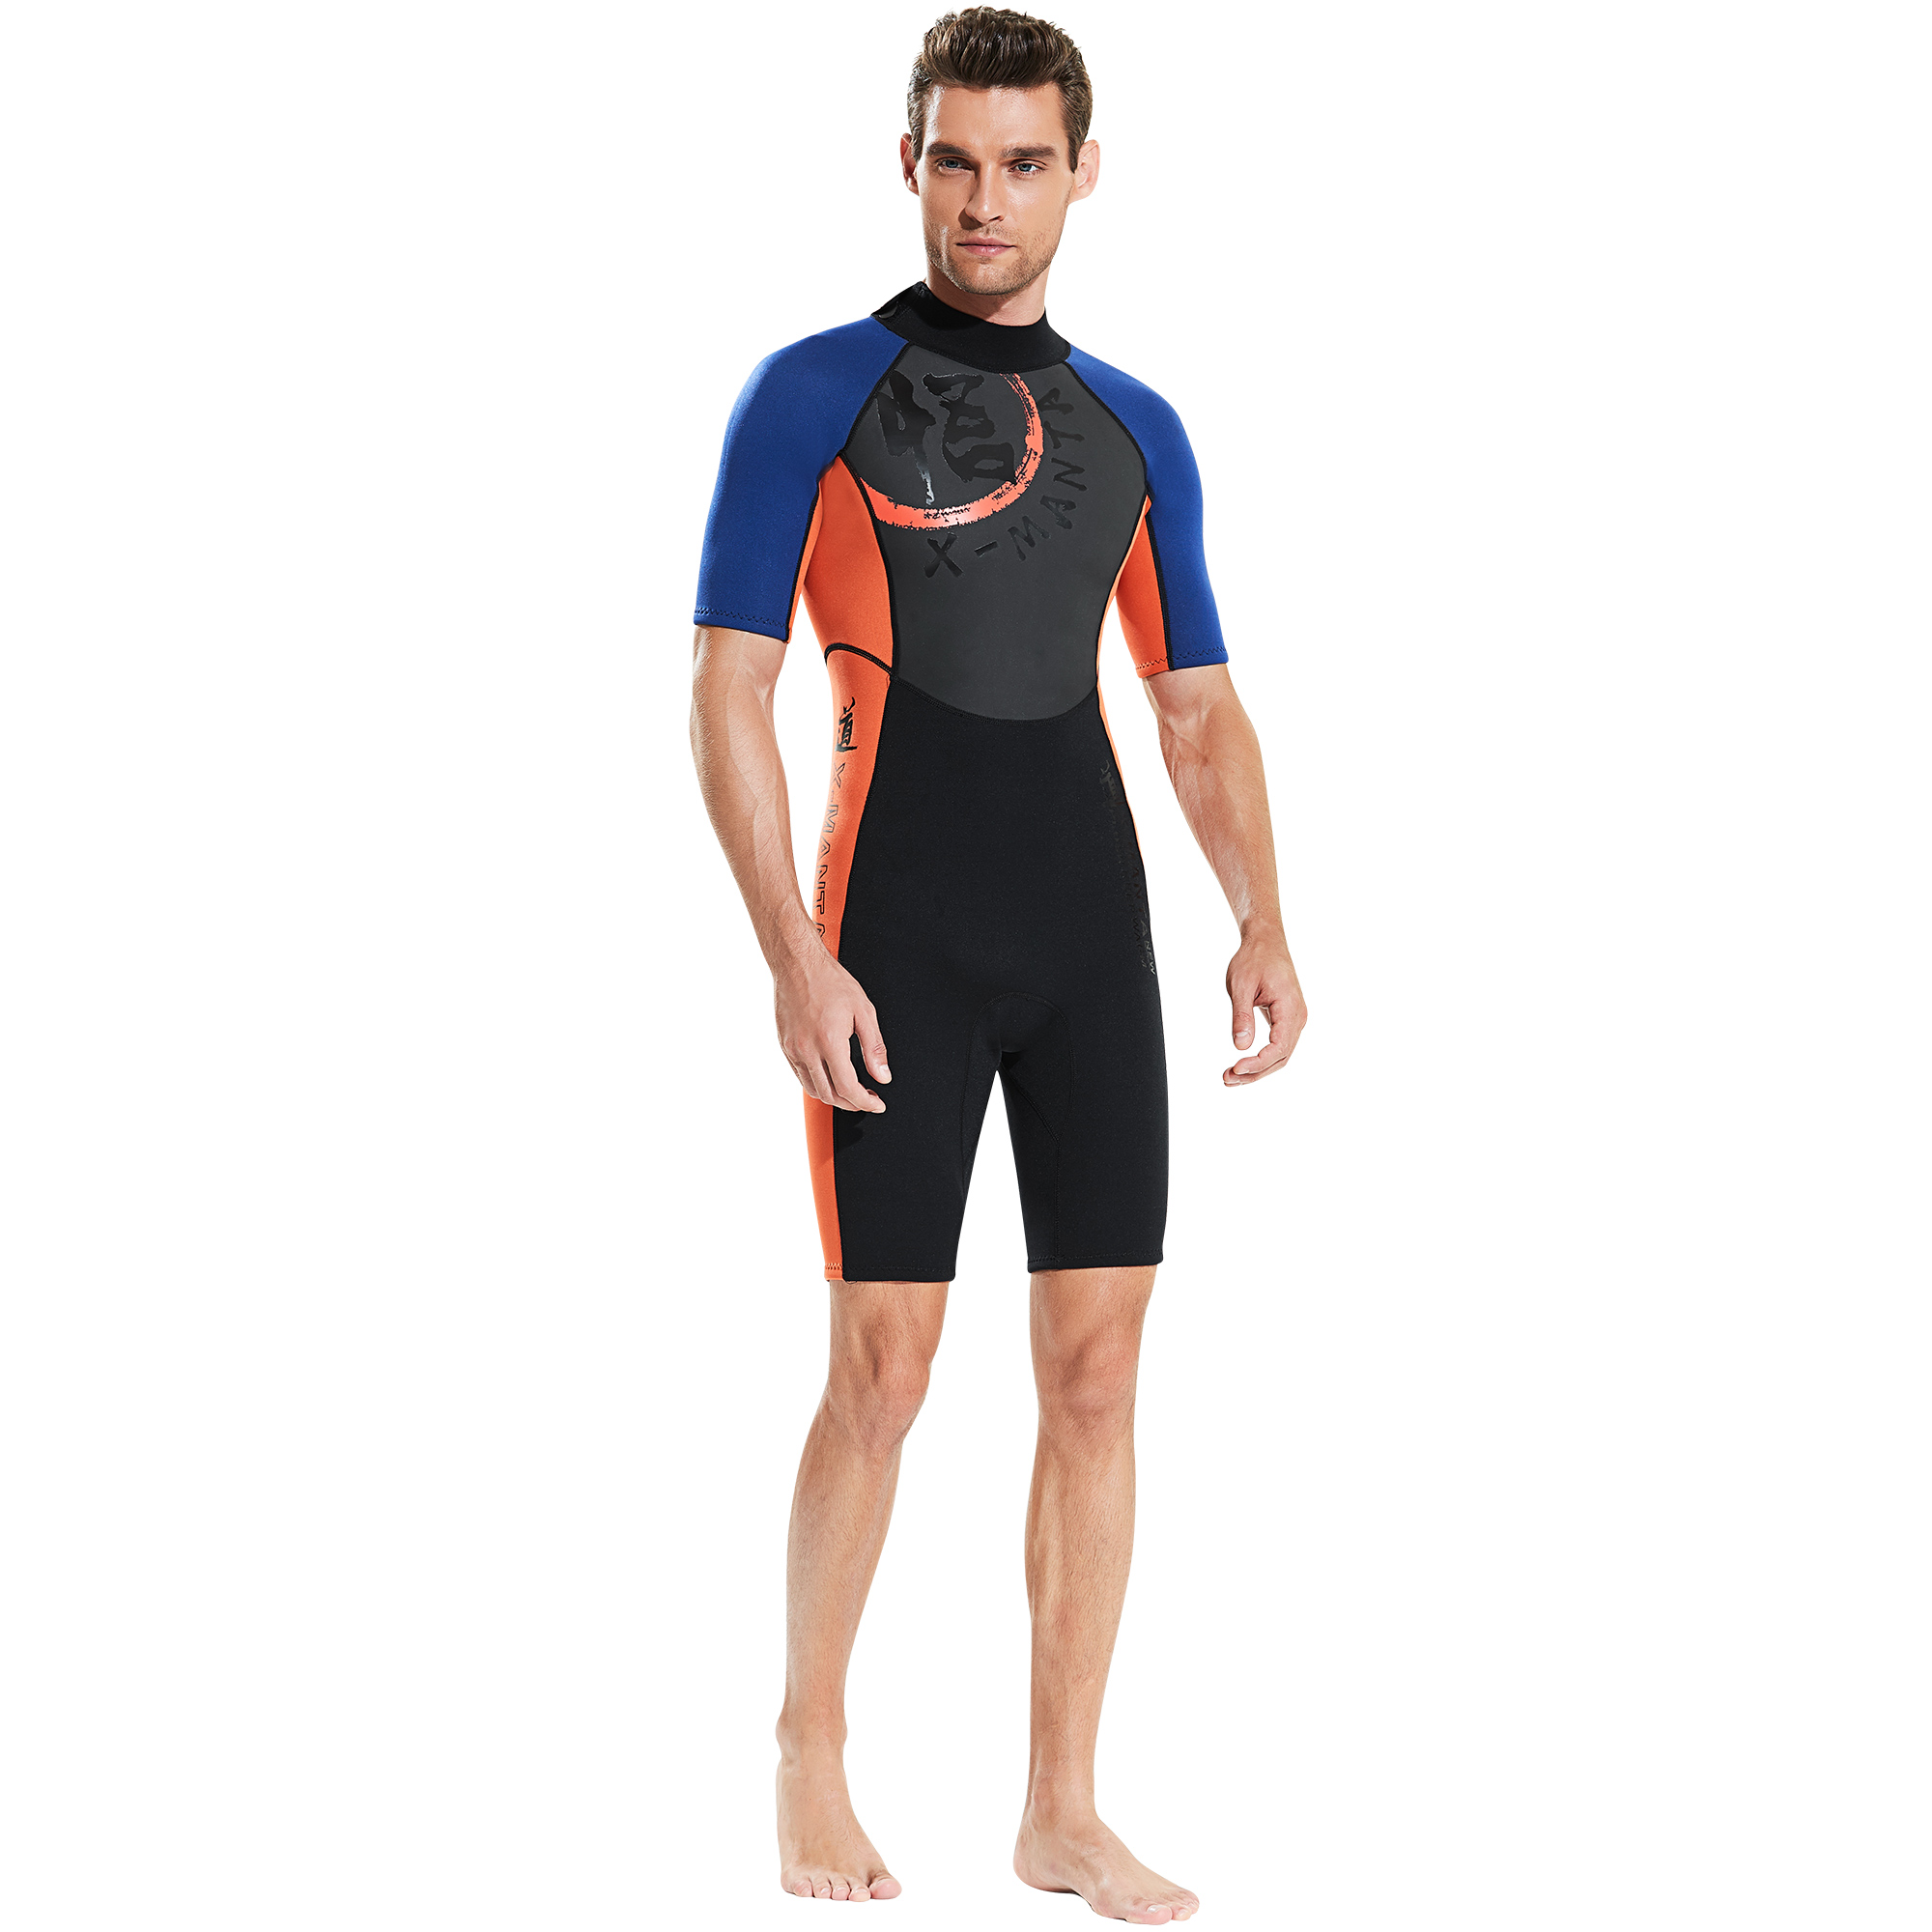 1.5mm Neoprene+Shark Skin Short Wetsuit One-piece Swimsuit Surfing Suit for Men Women Scuba Snorkeling Swimming Sailing